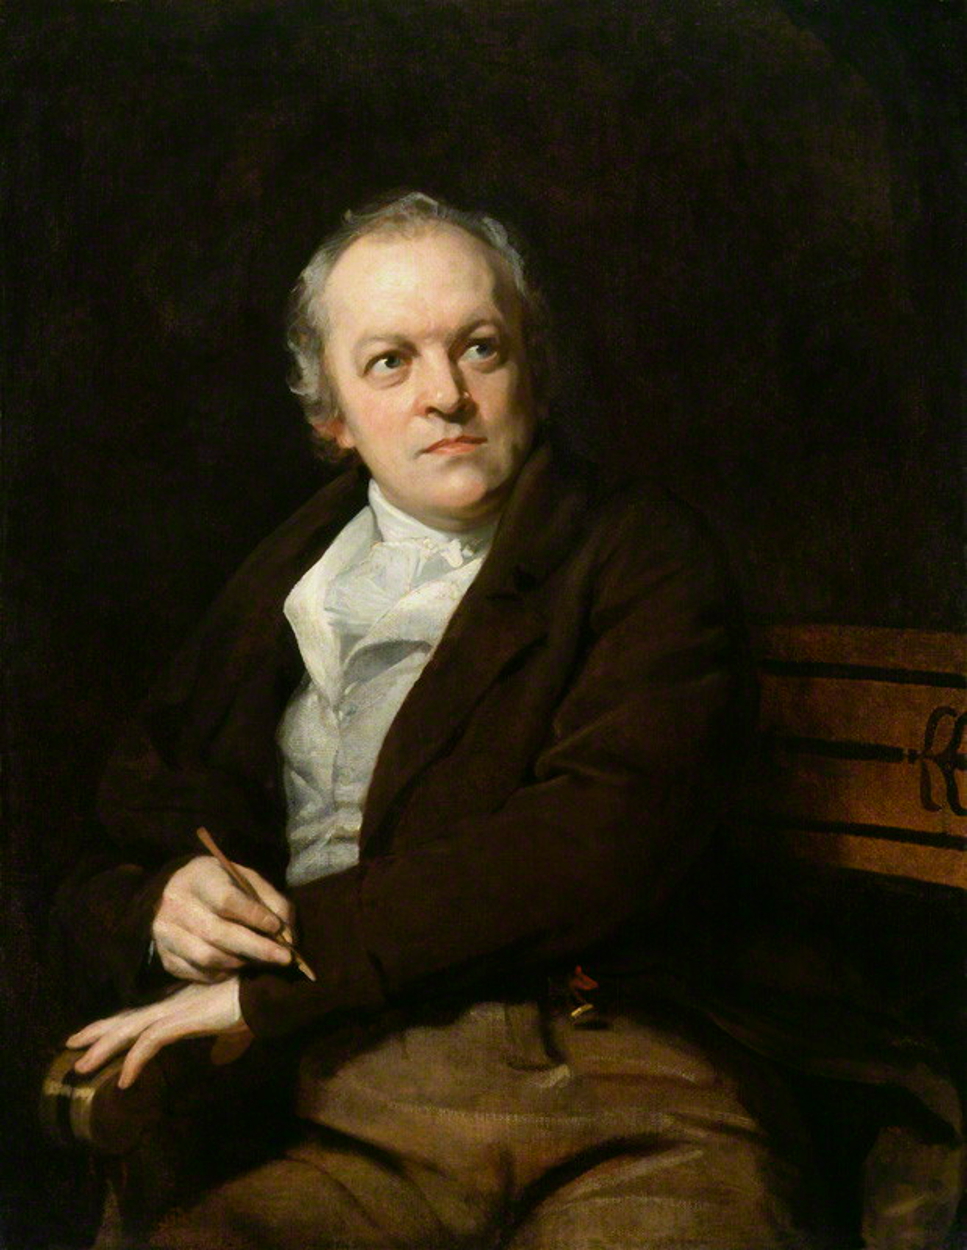 William Blake - November 28, 1757 - August 12, 1827